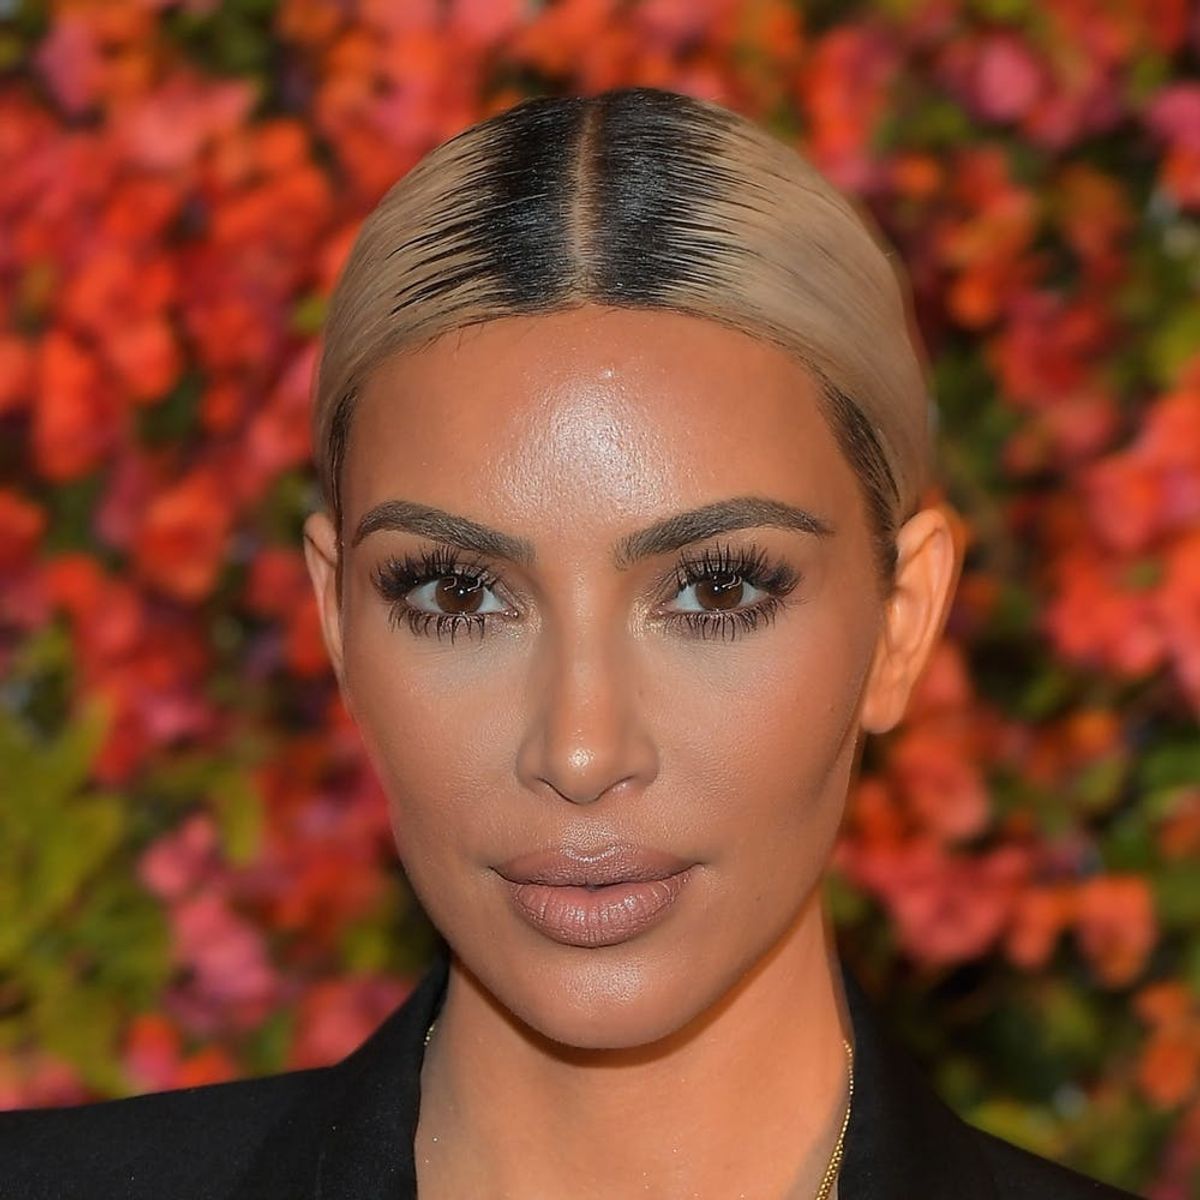 Kim Kardashian West Will Release Lipsticks to Rival Kylie Jenner’s in 2018